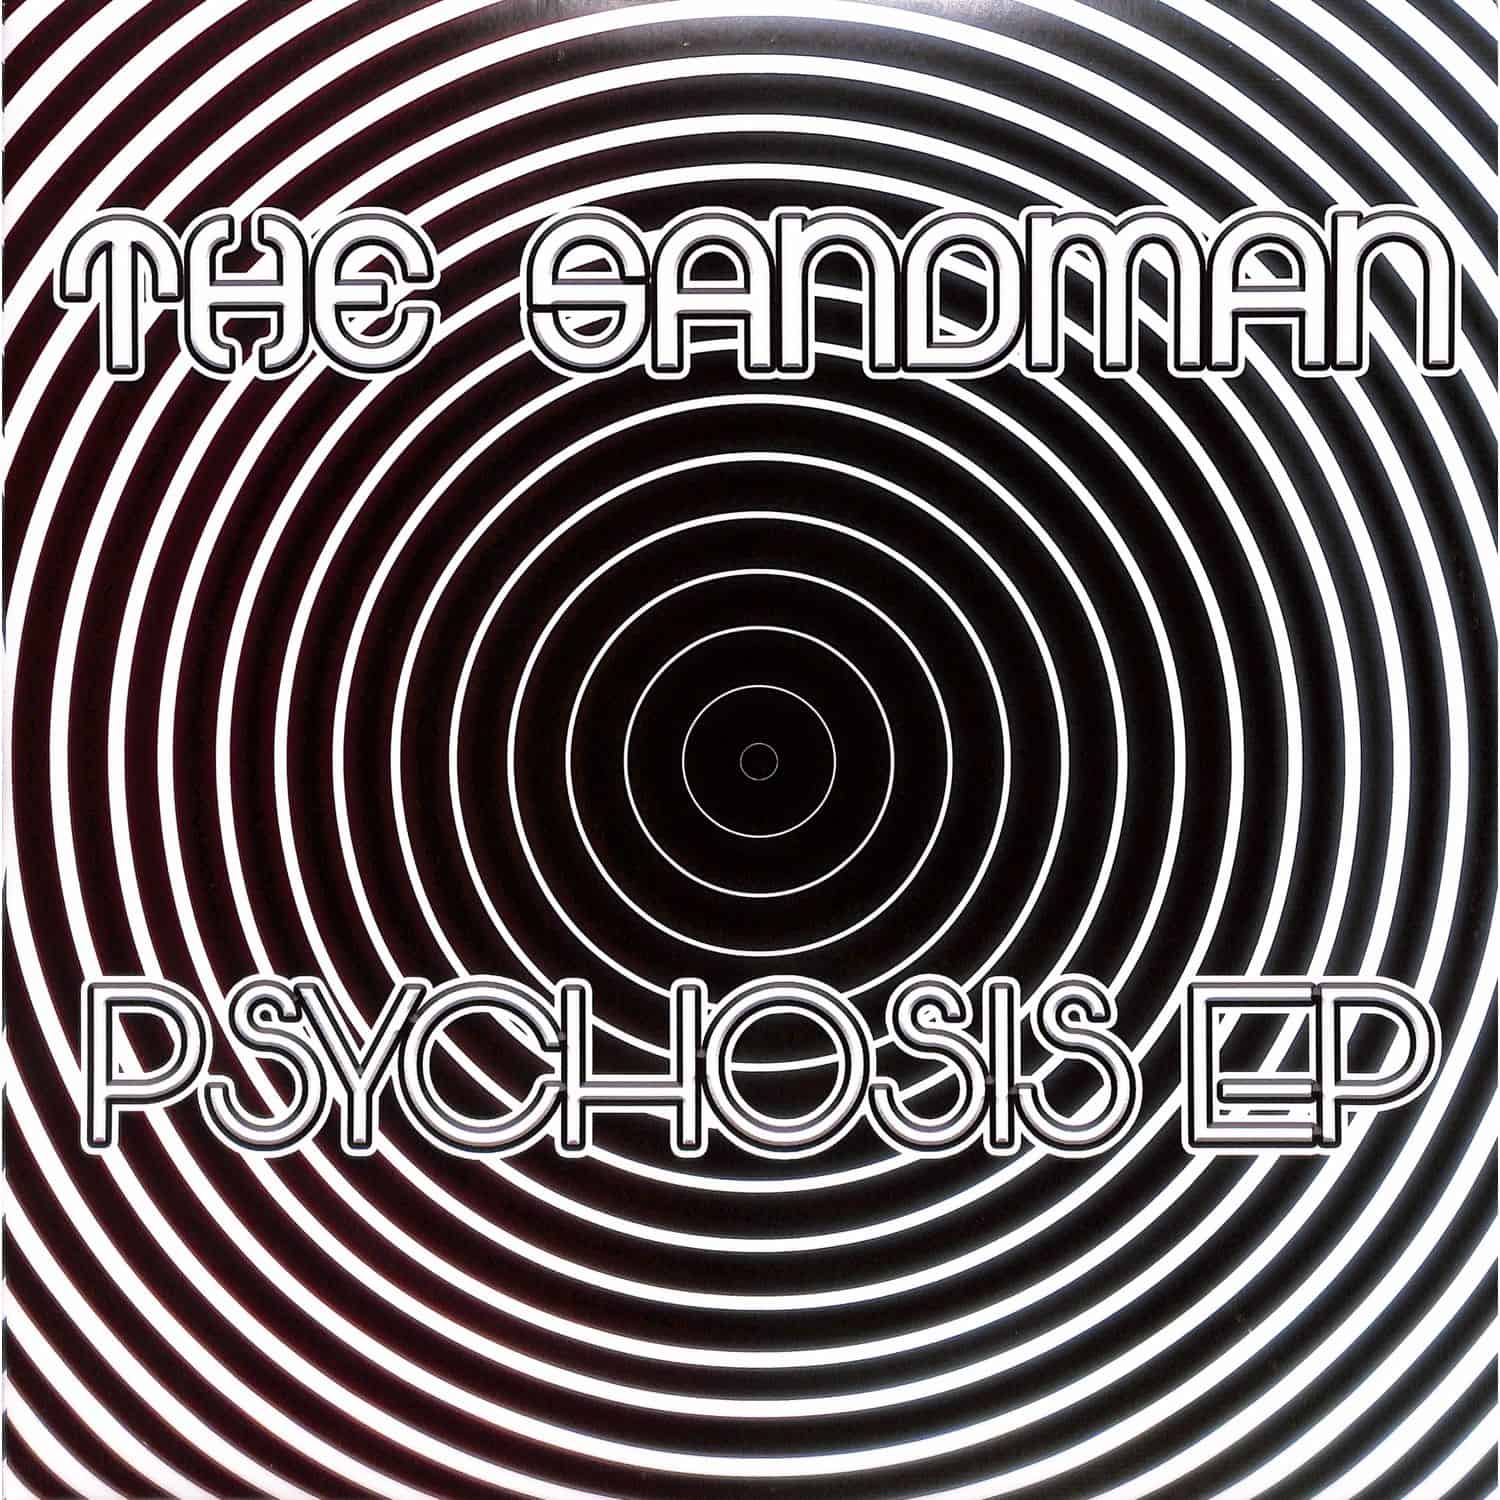 The Sandman - PSYCHOSIS EP